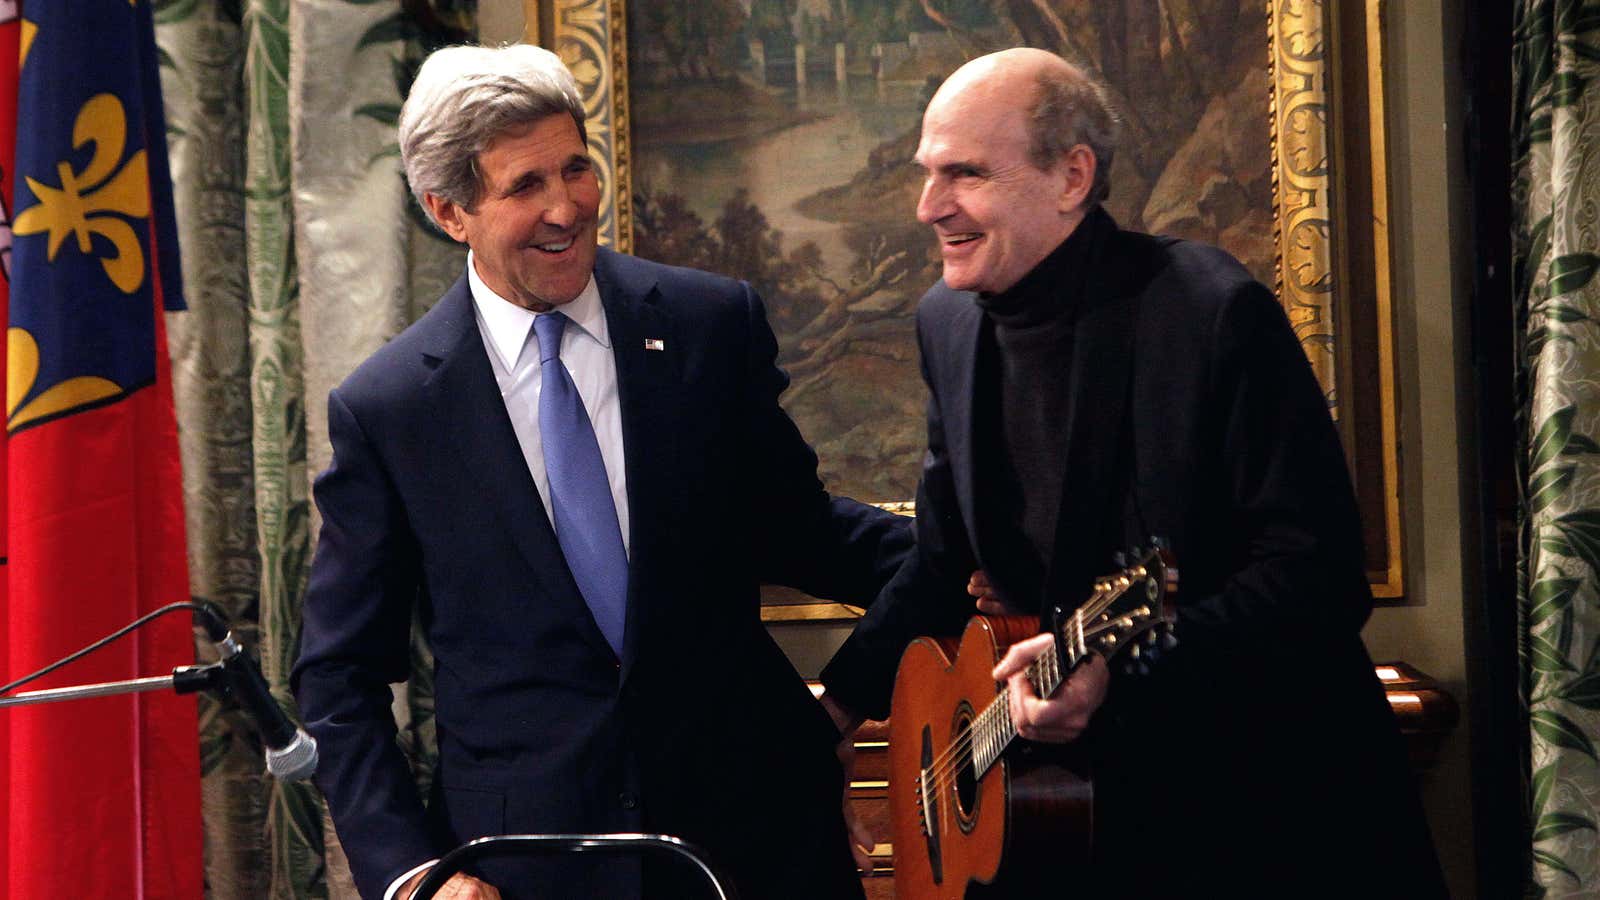 Kerry and Taylor play guitar diplomacy.